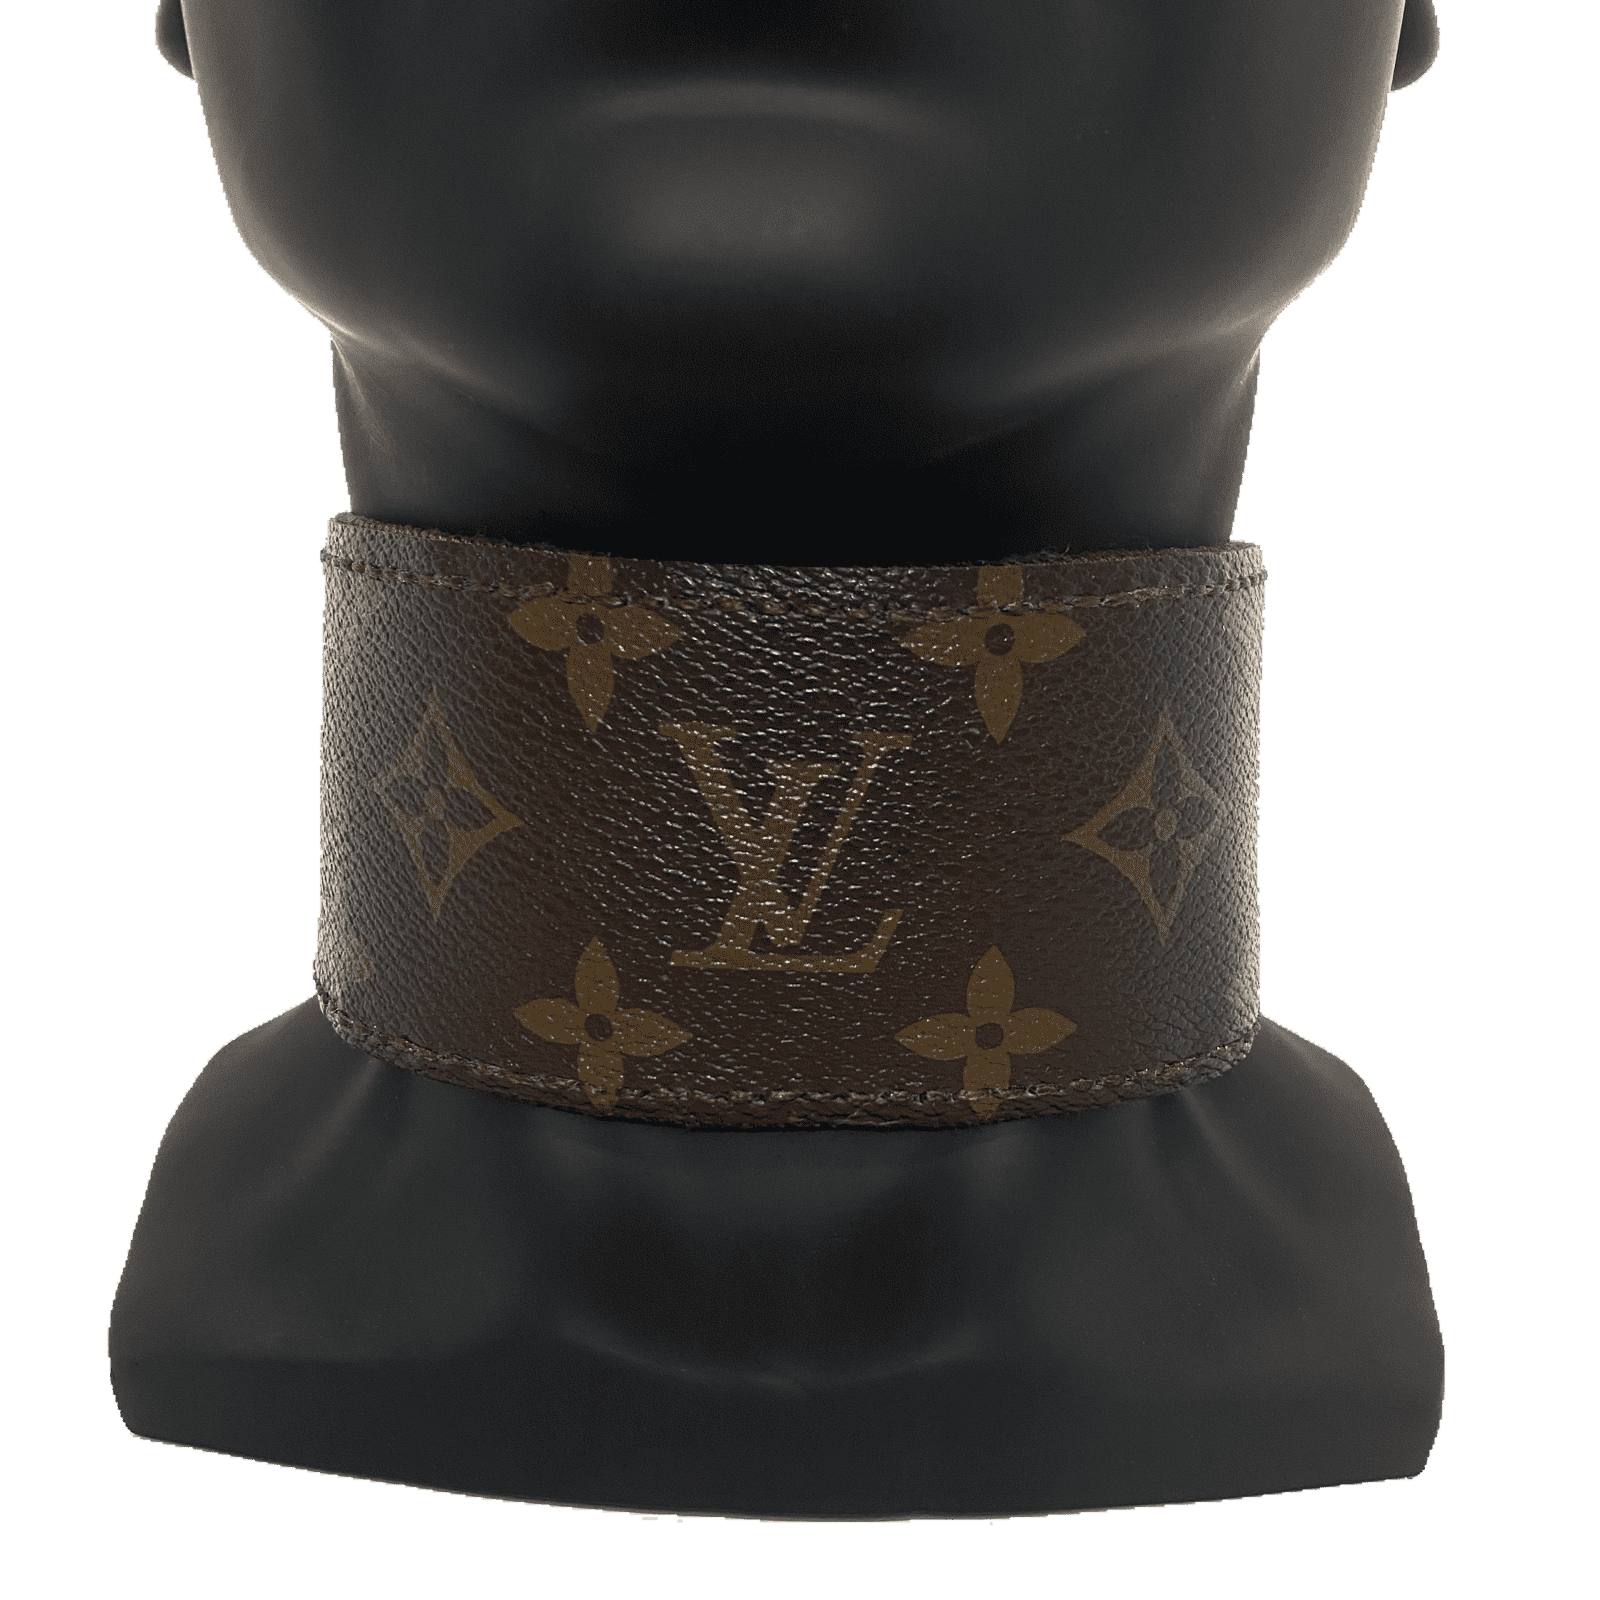 SNEAKERMASK Louis Vuitton Leather Mask